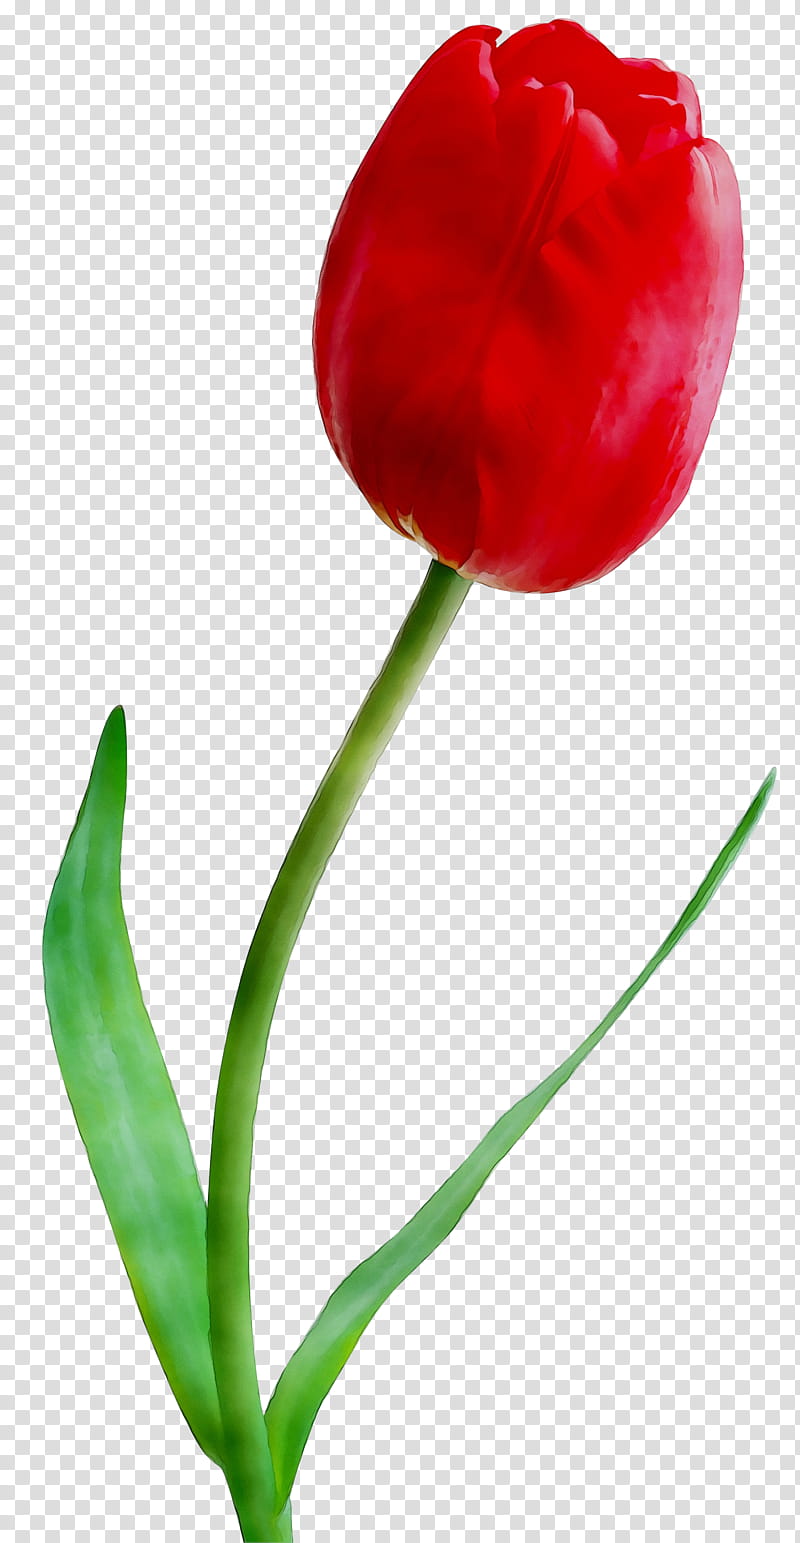 Flowers, Tulip, Lily, Calla Lily, Cut Flowers, Plant Stem, Bud, Petal transparent background PNG clipart